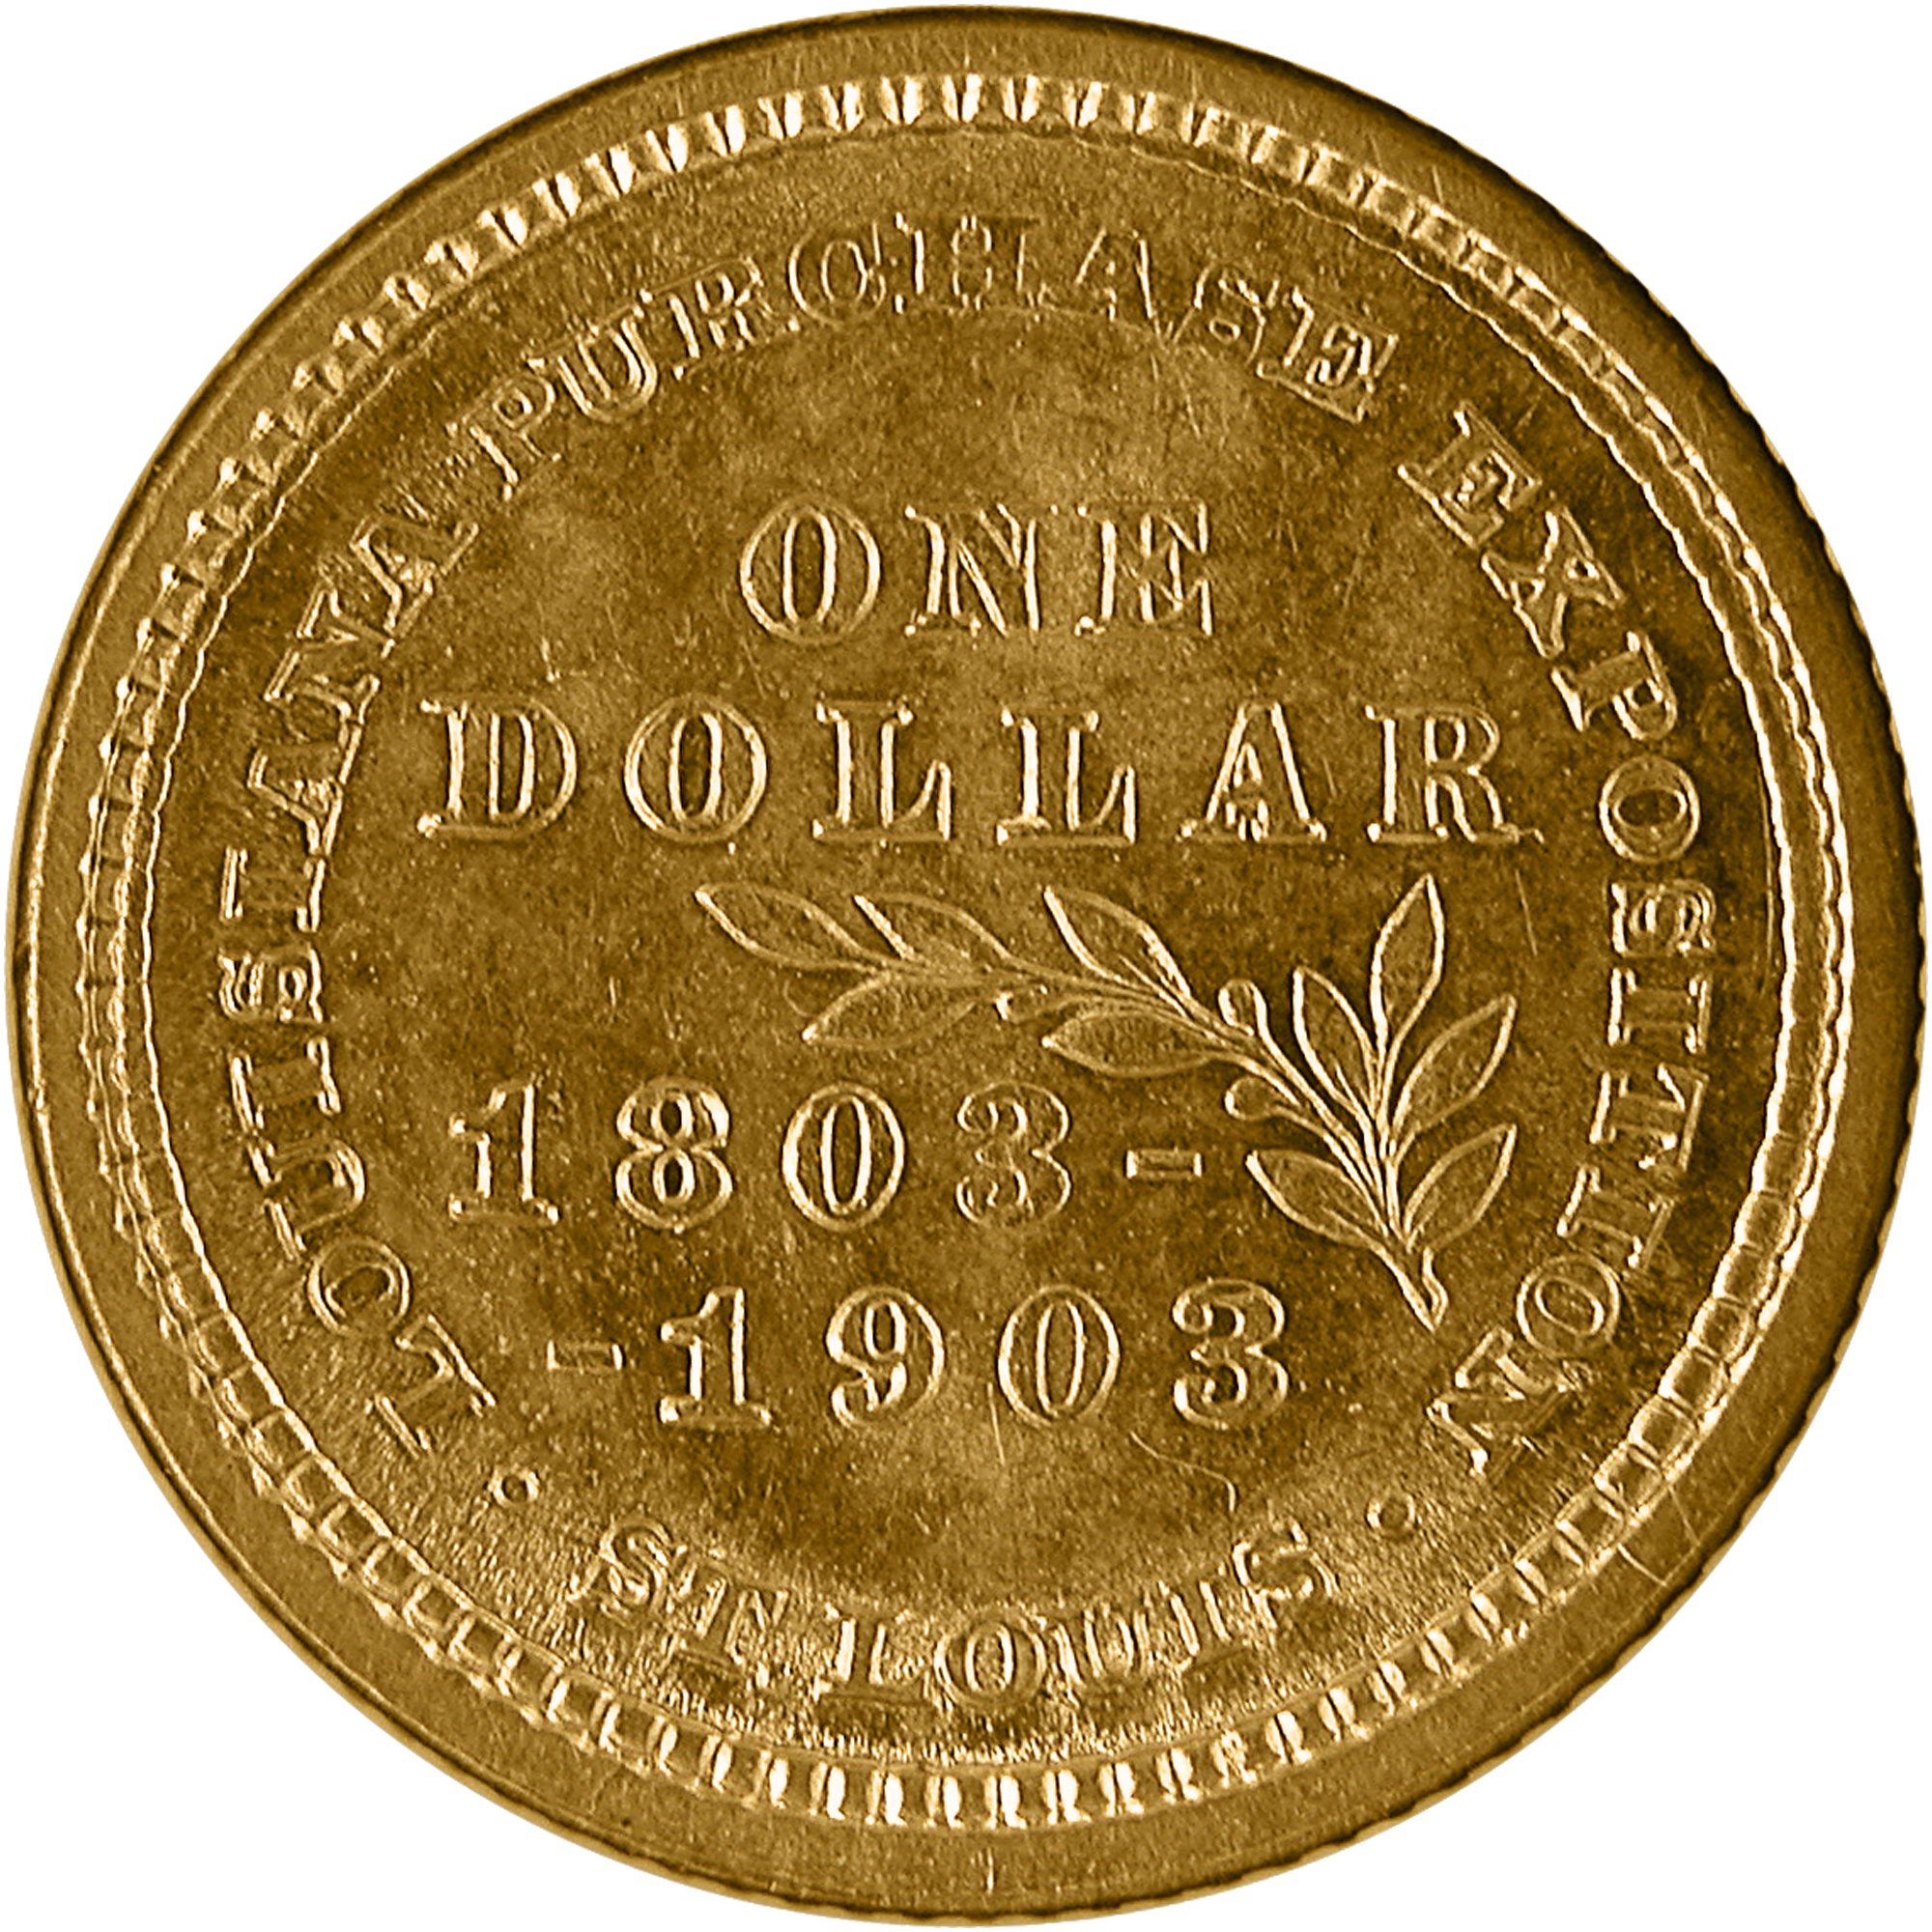 1903 Louisiana Purchase Exposition Thomas Jefferson Commemorative Gold One Dollar Coin Reverse